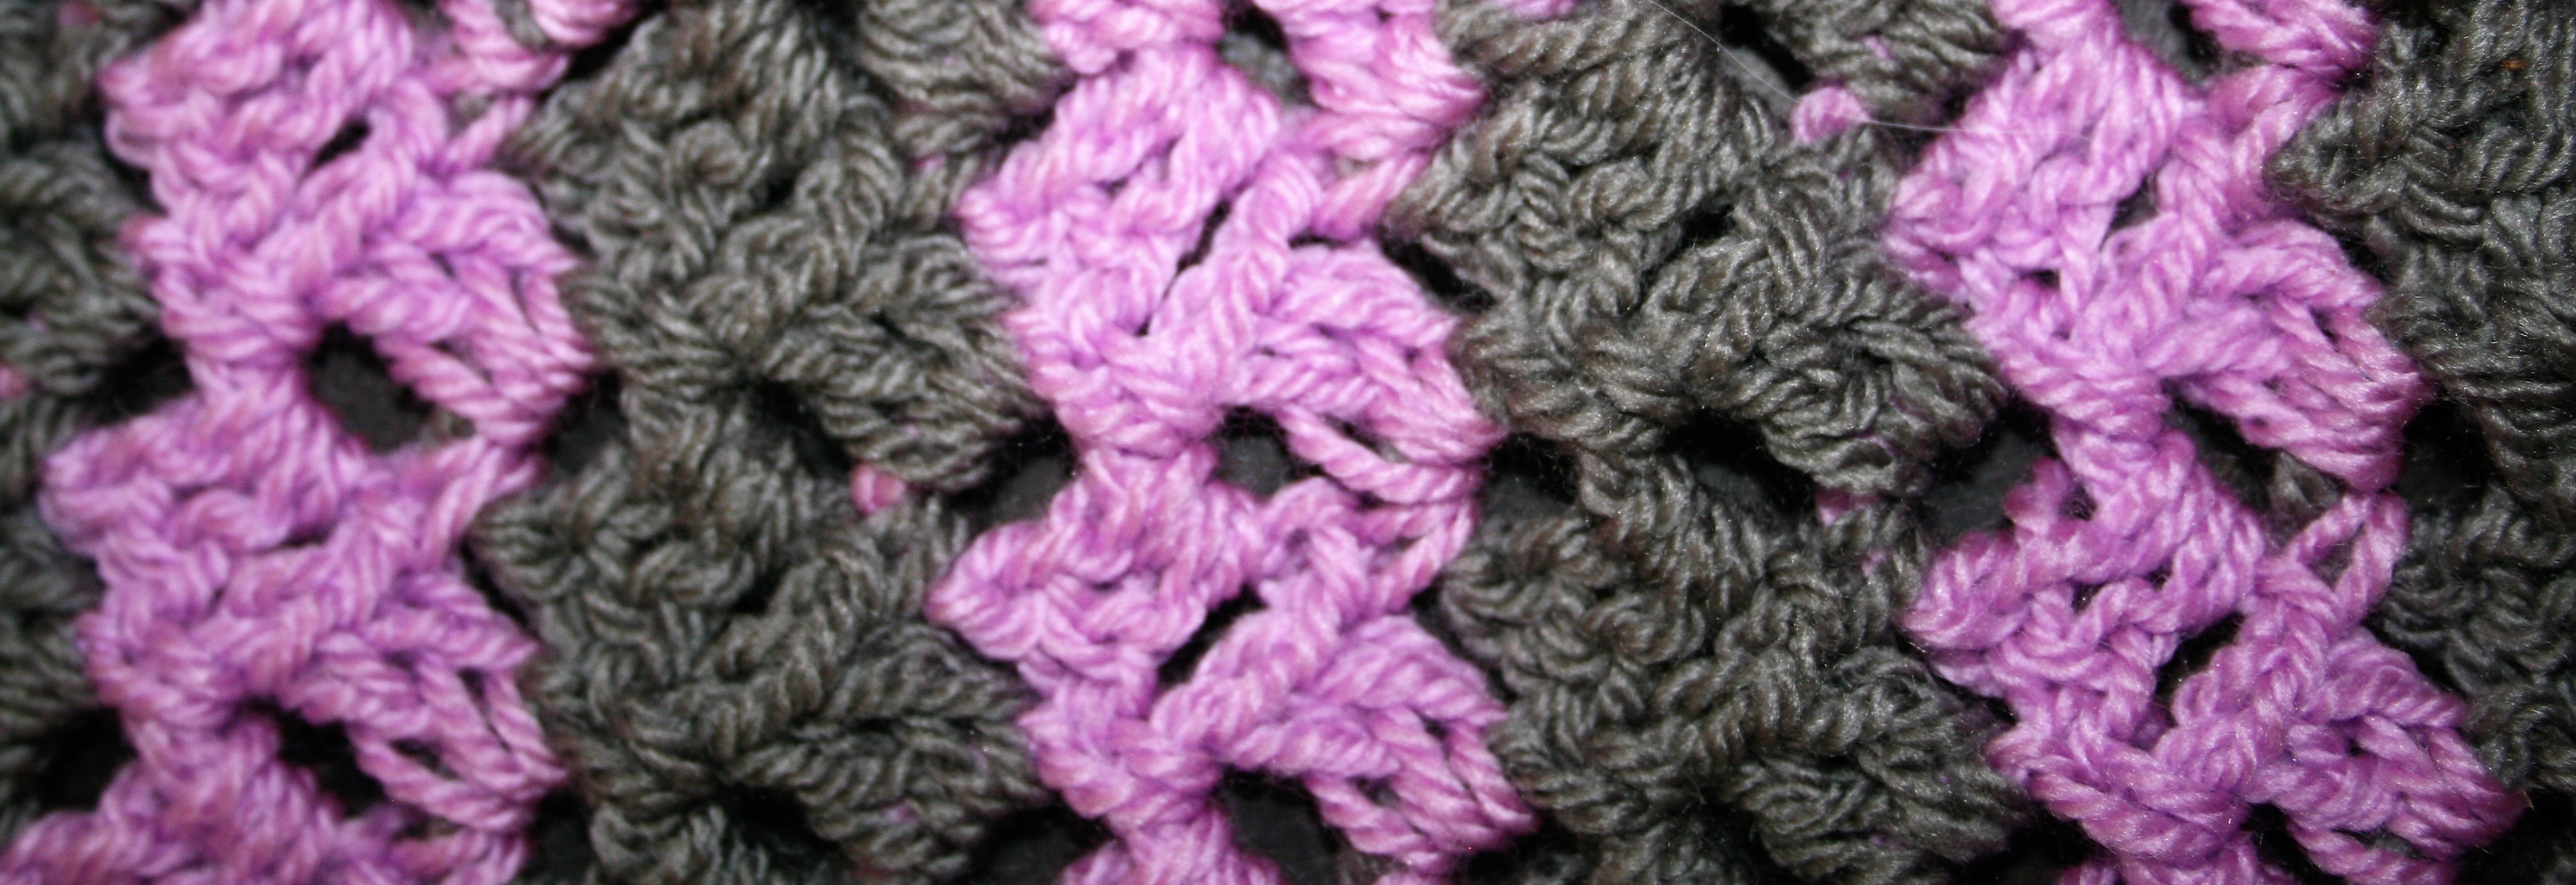 Crochet Bag Handles- The Best 3 - Linda Dean CrochetLinda Dean Crochet